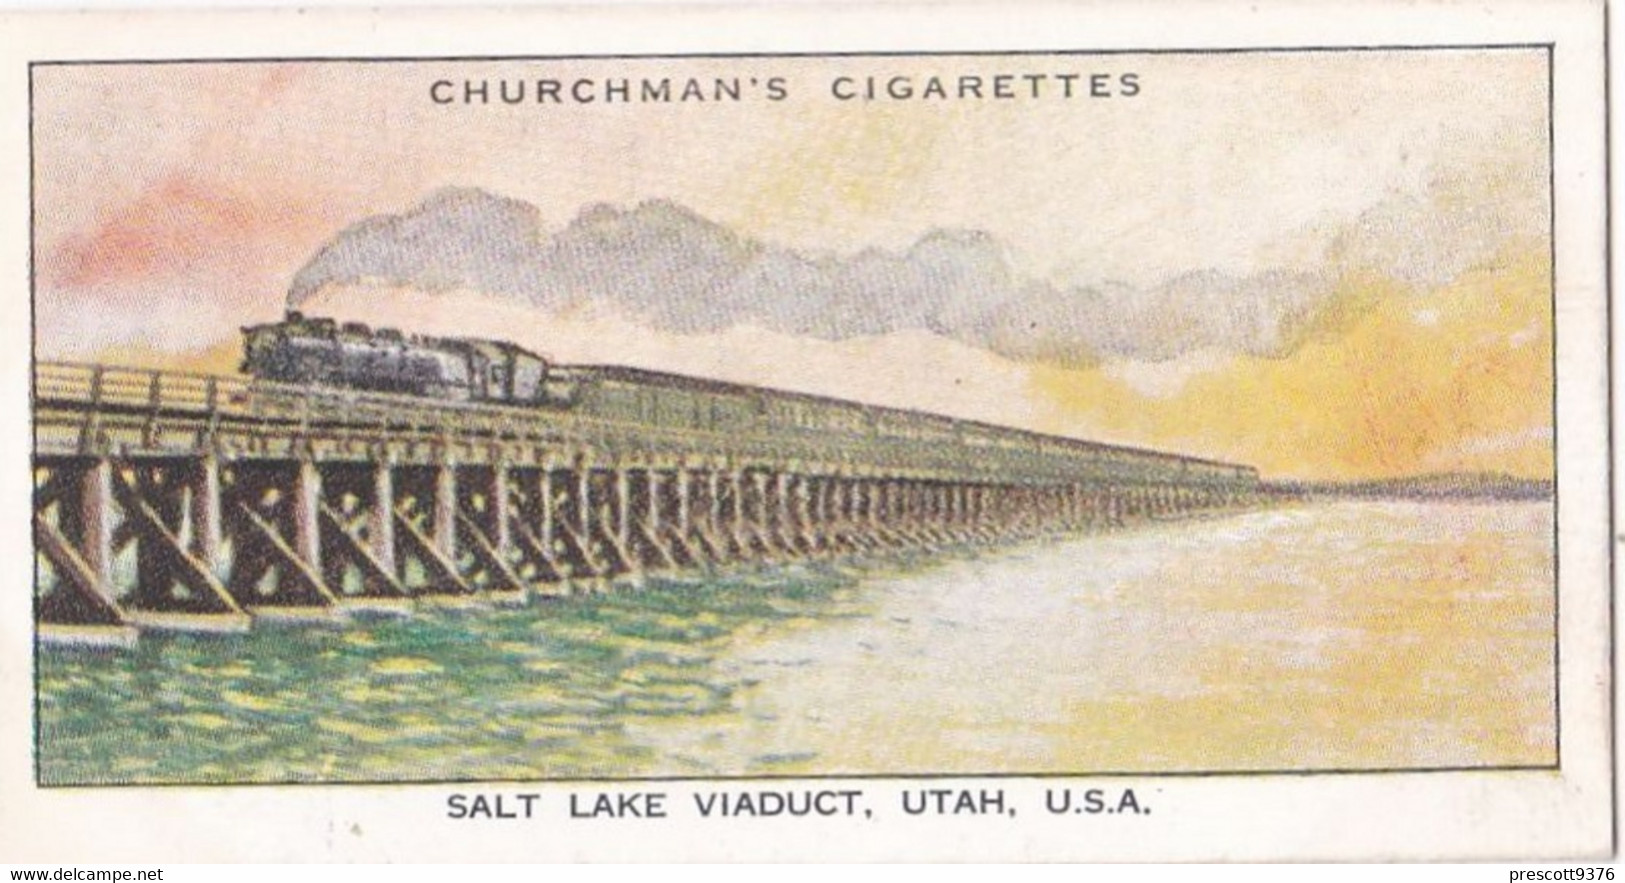 Wonderful Railway Travel, 1937 - 50 Salt Lake Viaduct, Utah, USA - Churchman Cigarette Card - Trains - Churchman